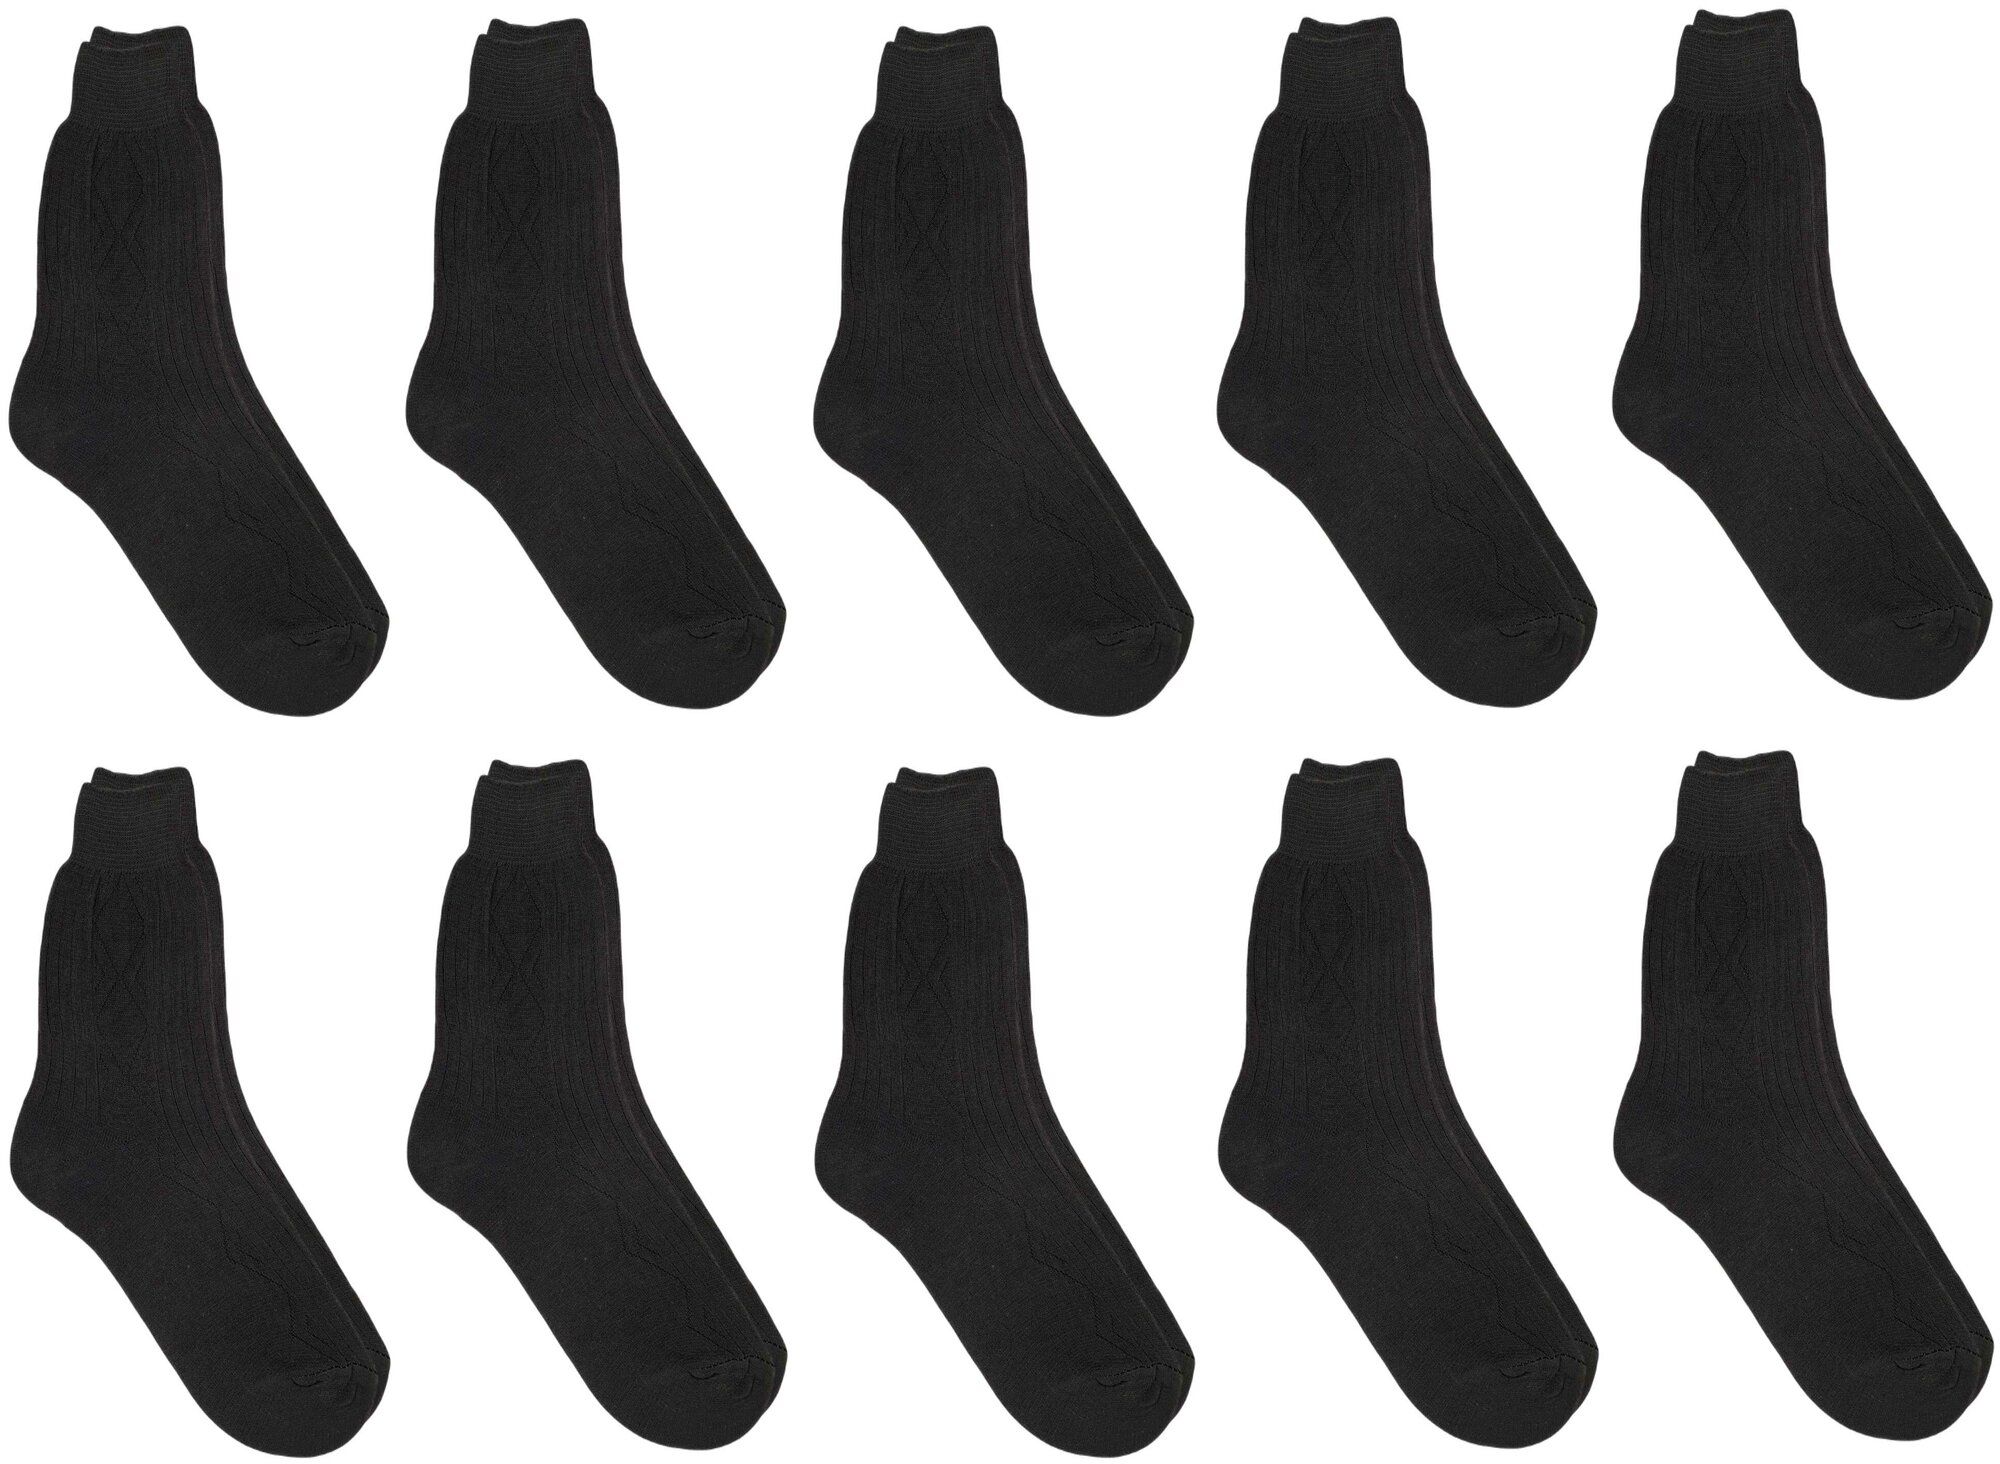 Носки мужские набор из 10 пар/Likeviz/25272931 размеры/39-4041-4243-4445-46 размеры/Носки мужские черные/Носки мужские длинные/Носки мужские высокие/Носки мужские повседневные